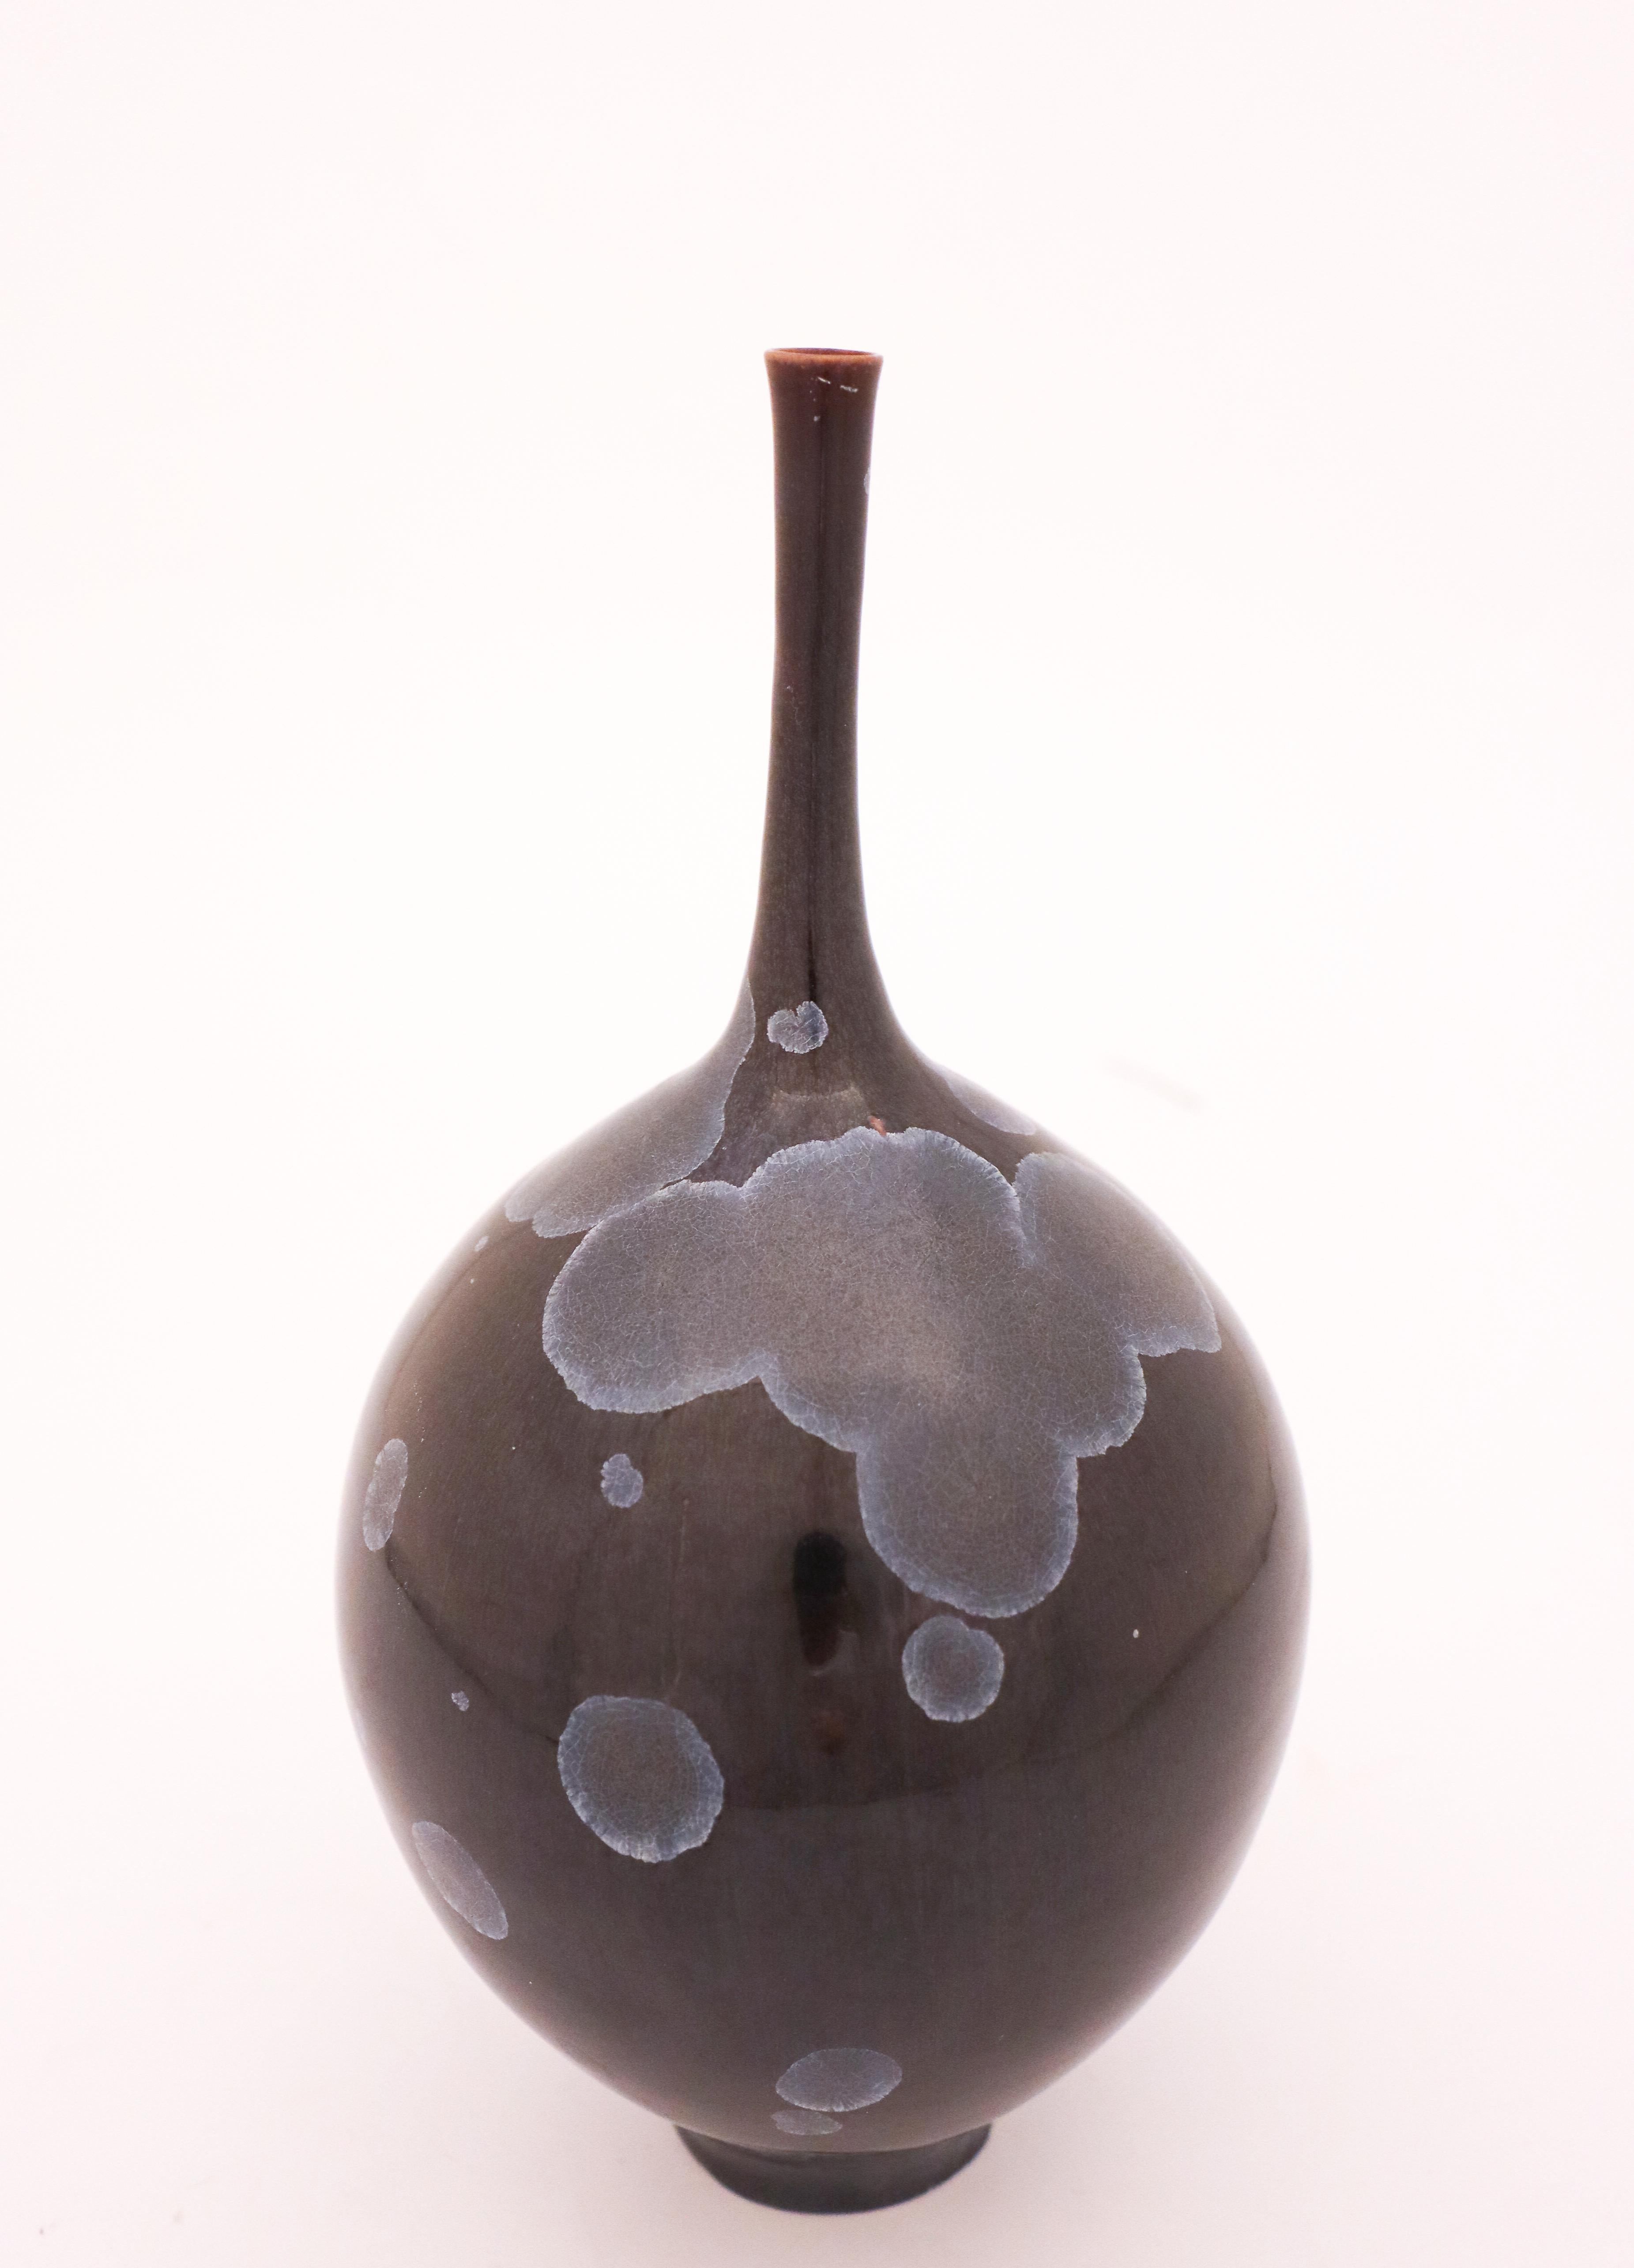 Glazed Vase by Isak Isaksson, Black / Grey glaze, Contemporary Swedish Ceramicist